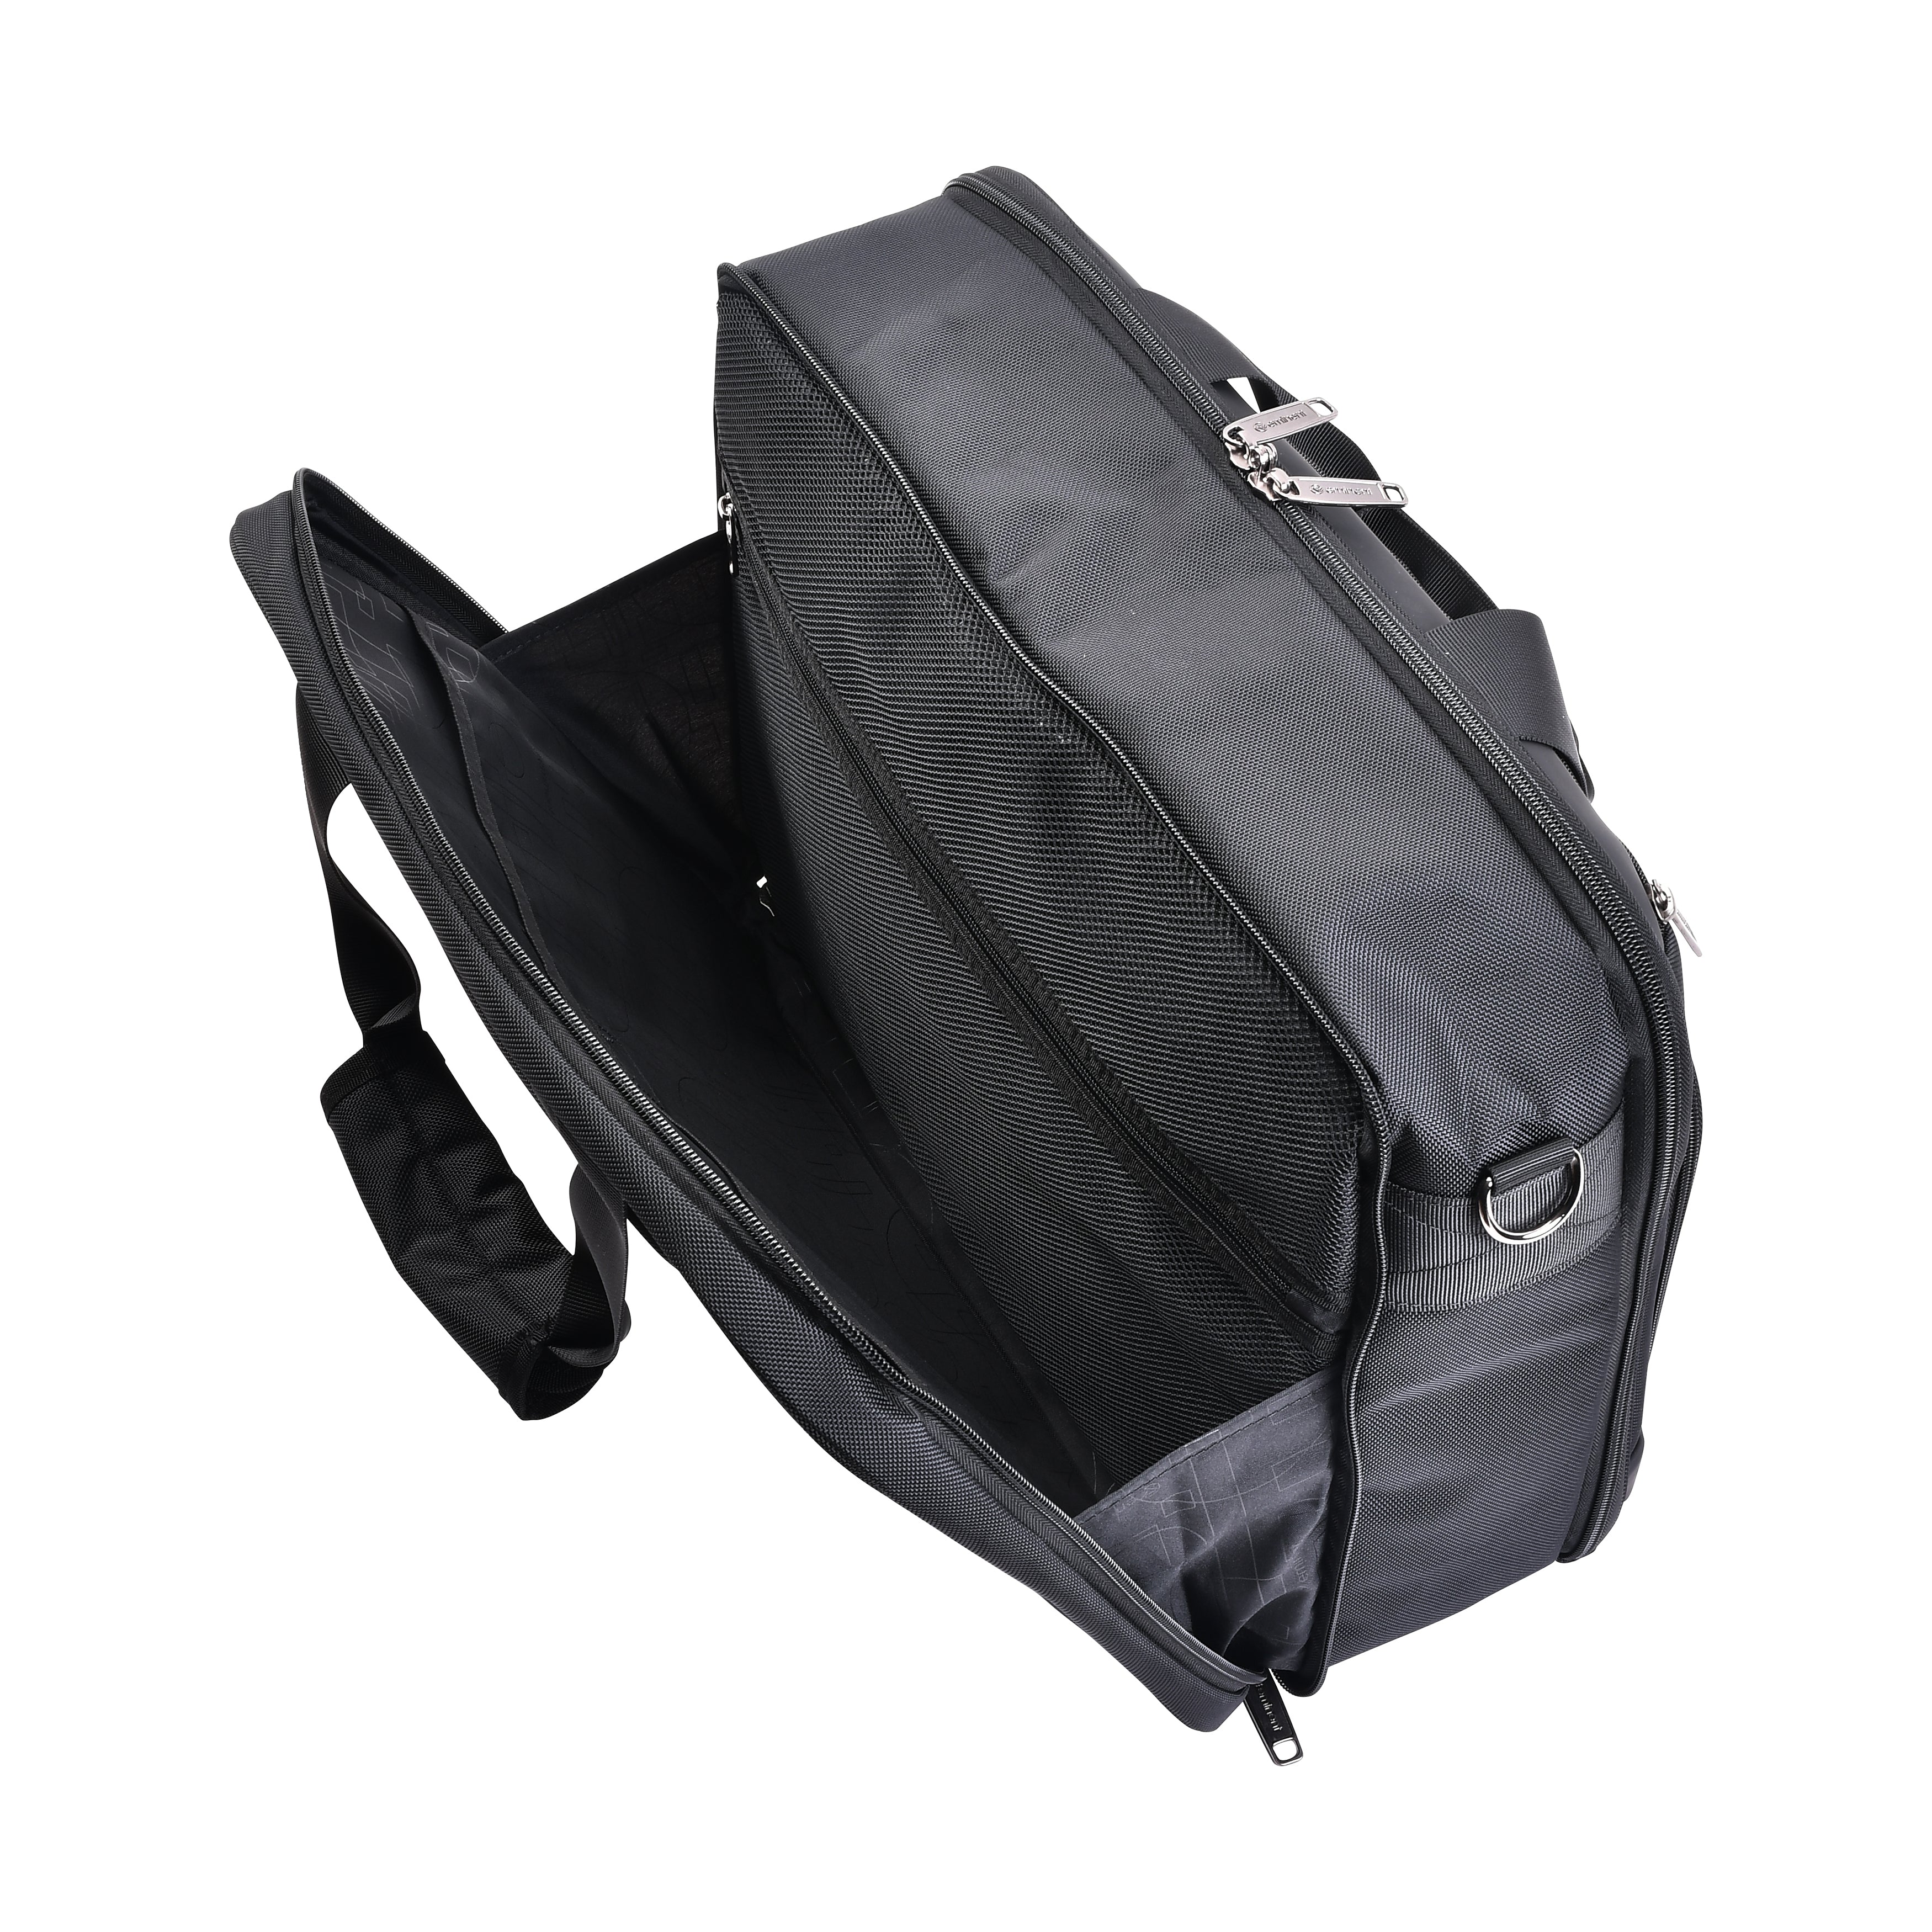 Eminent Premium 17inch Shoulder Laptop Bag Polyester Light Weight 180° Opening Business Laptop Case for Men Women on Travel Business, V368B-17